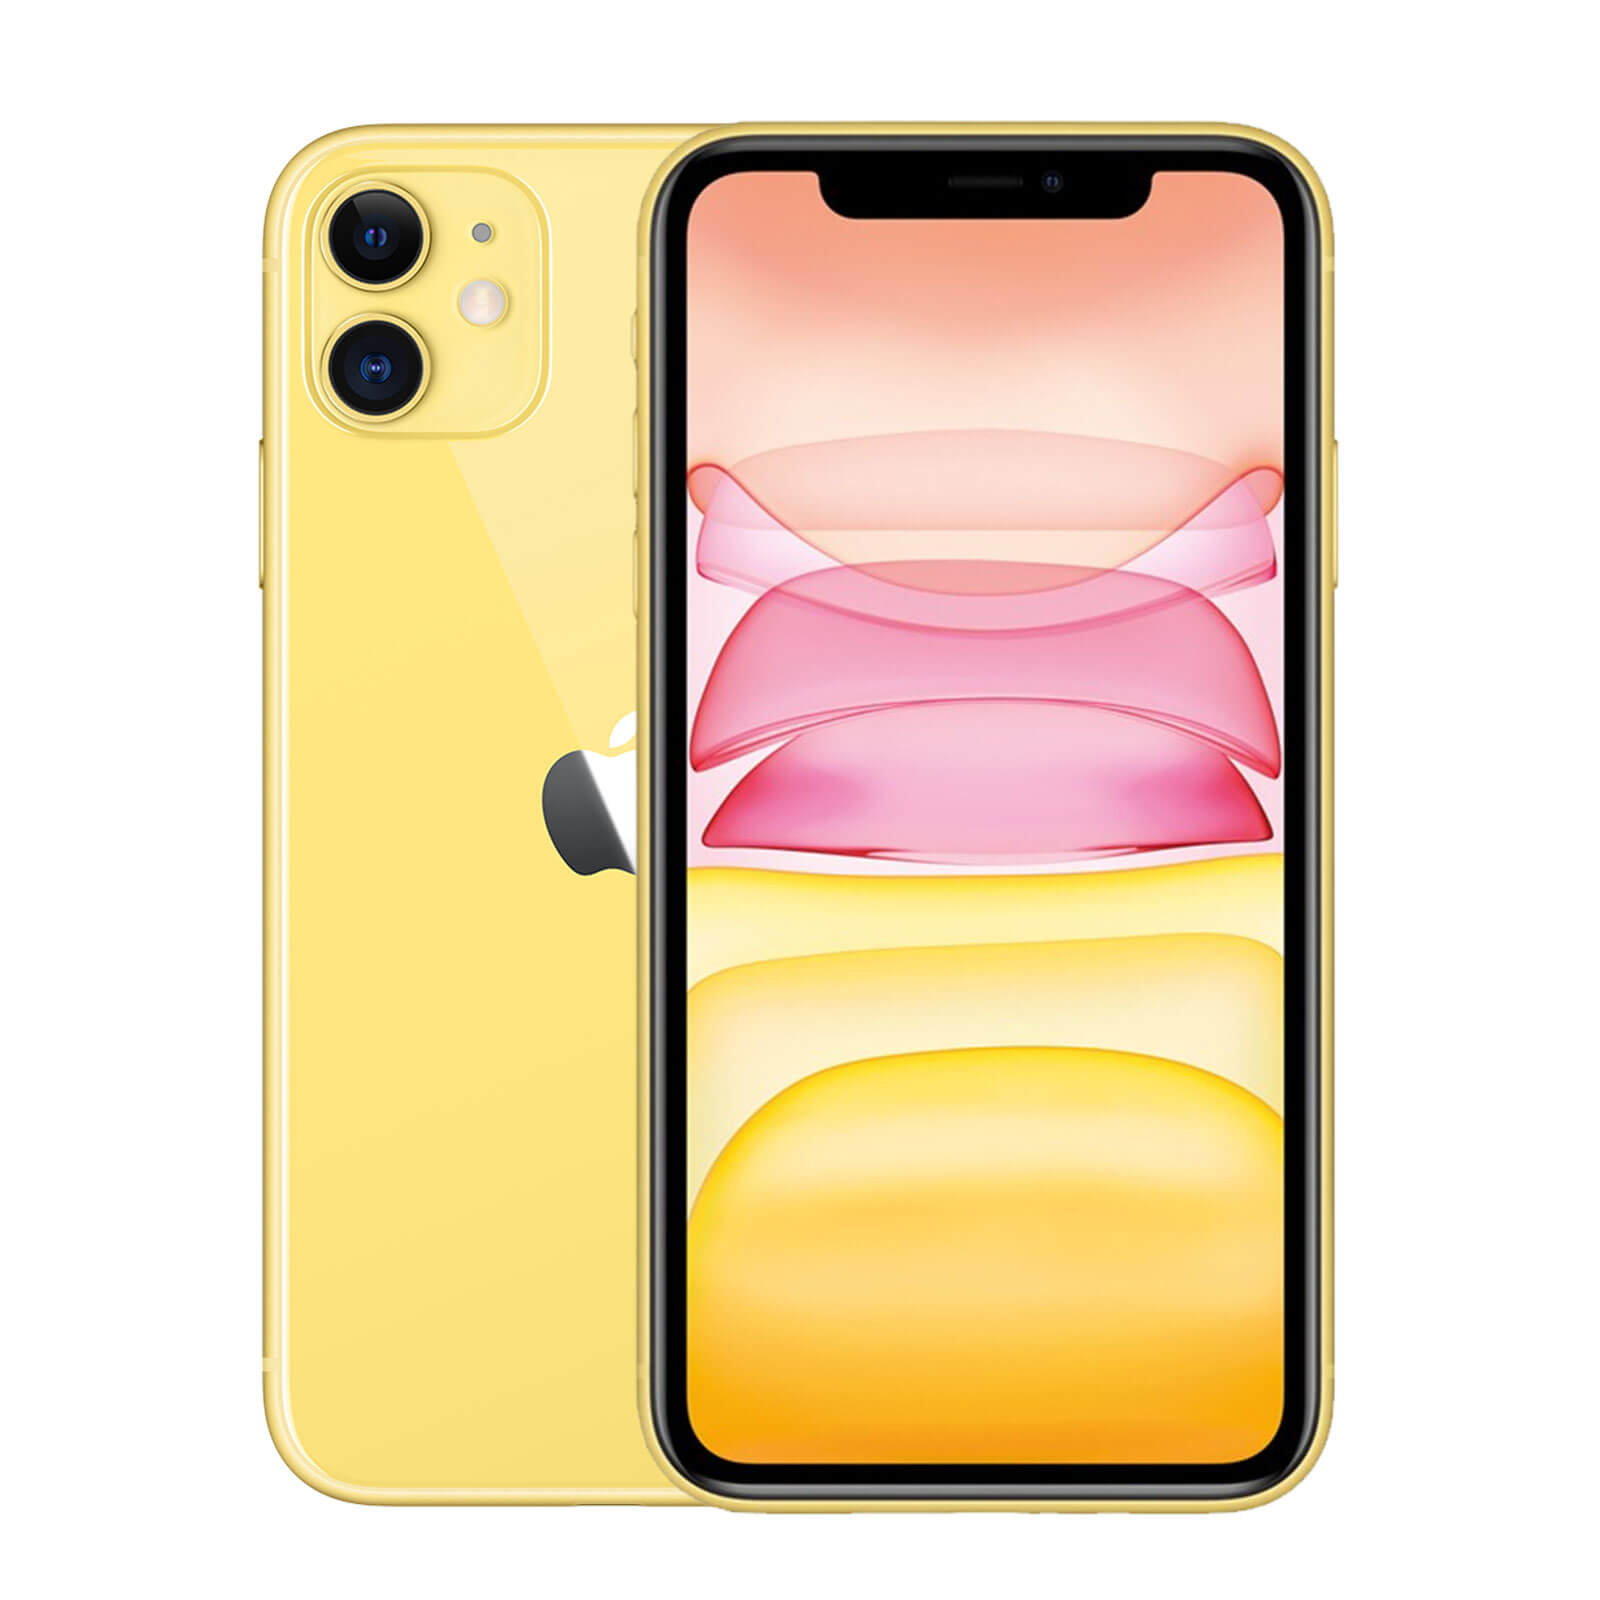 Apple iPhone 11 128GB Yellow Good - Unlocked